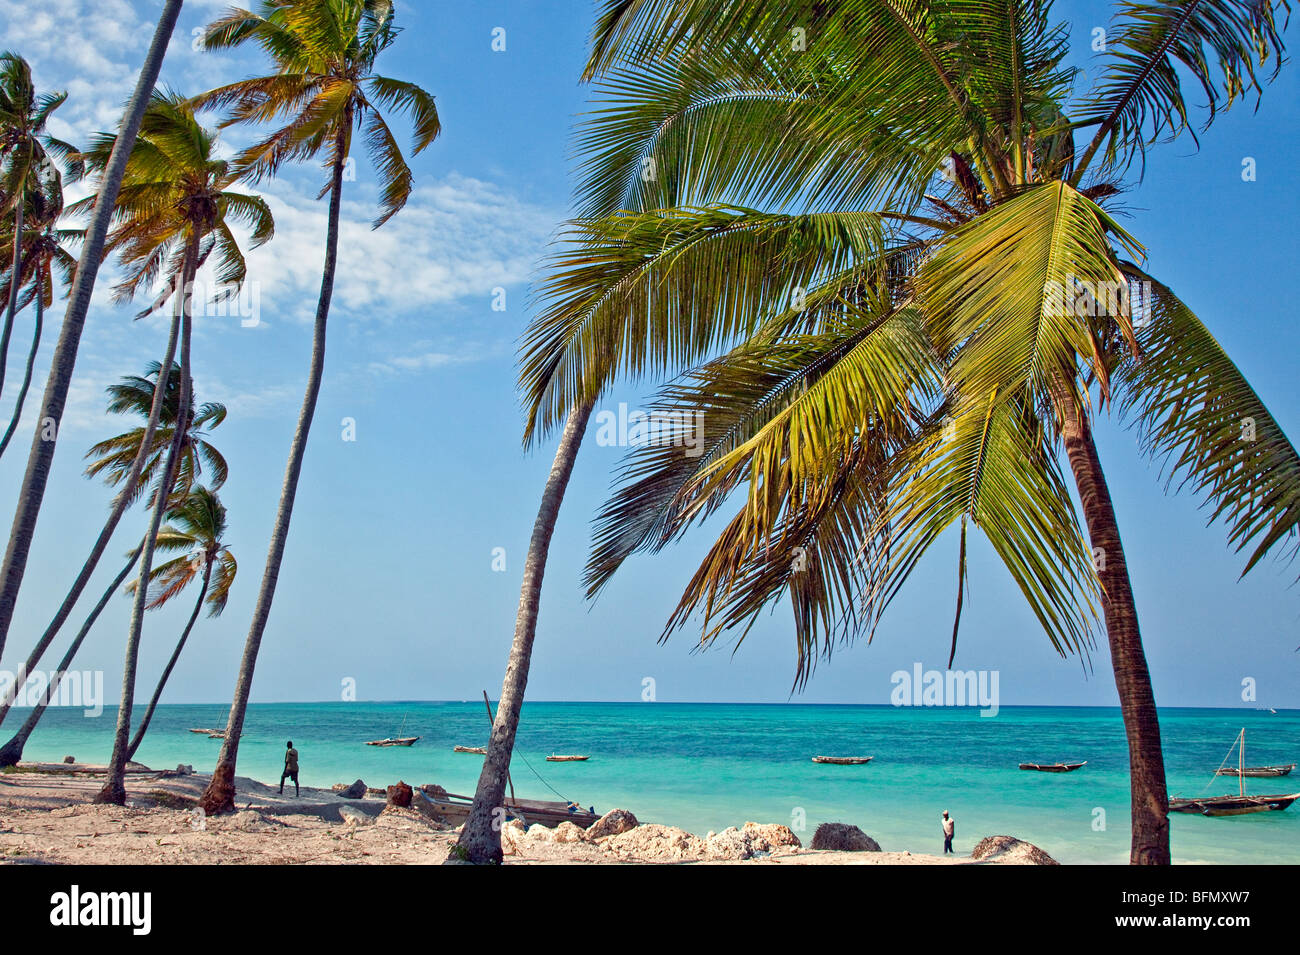 Tanzania, Zanzibar. The coconut palm-lined beach at Jambiani has one of the finest beaches in the southeast of Zanzibar Island. Stock Photo